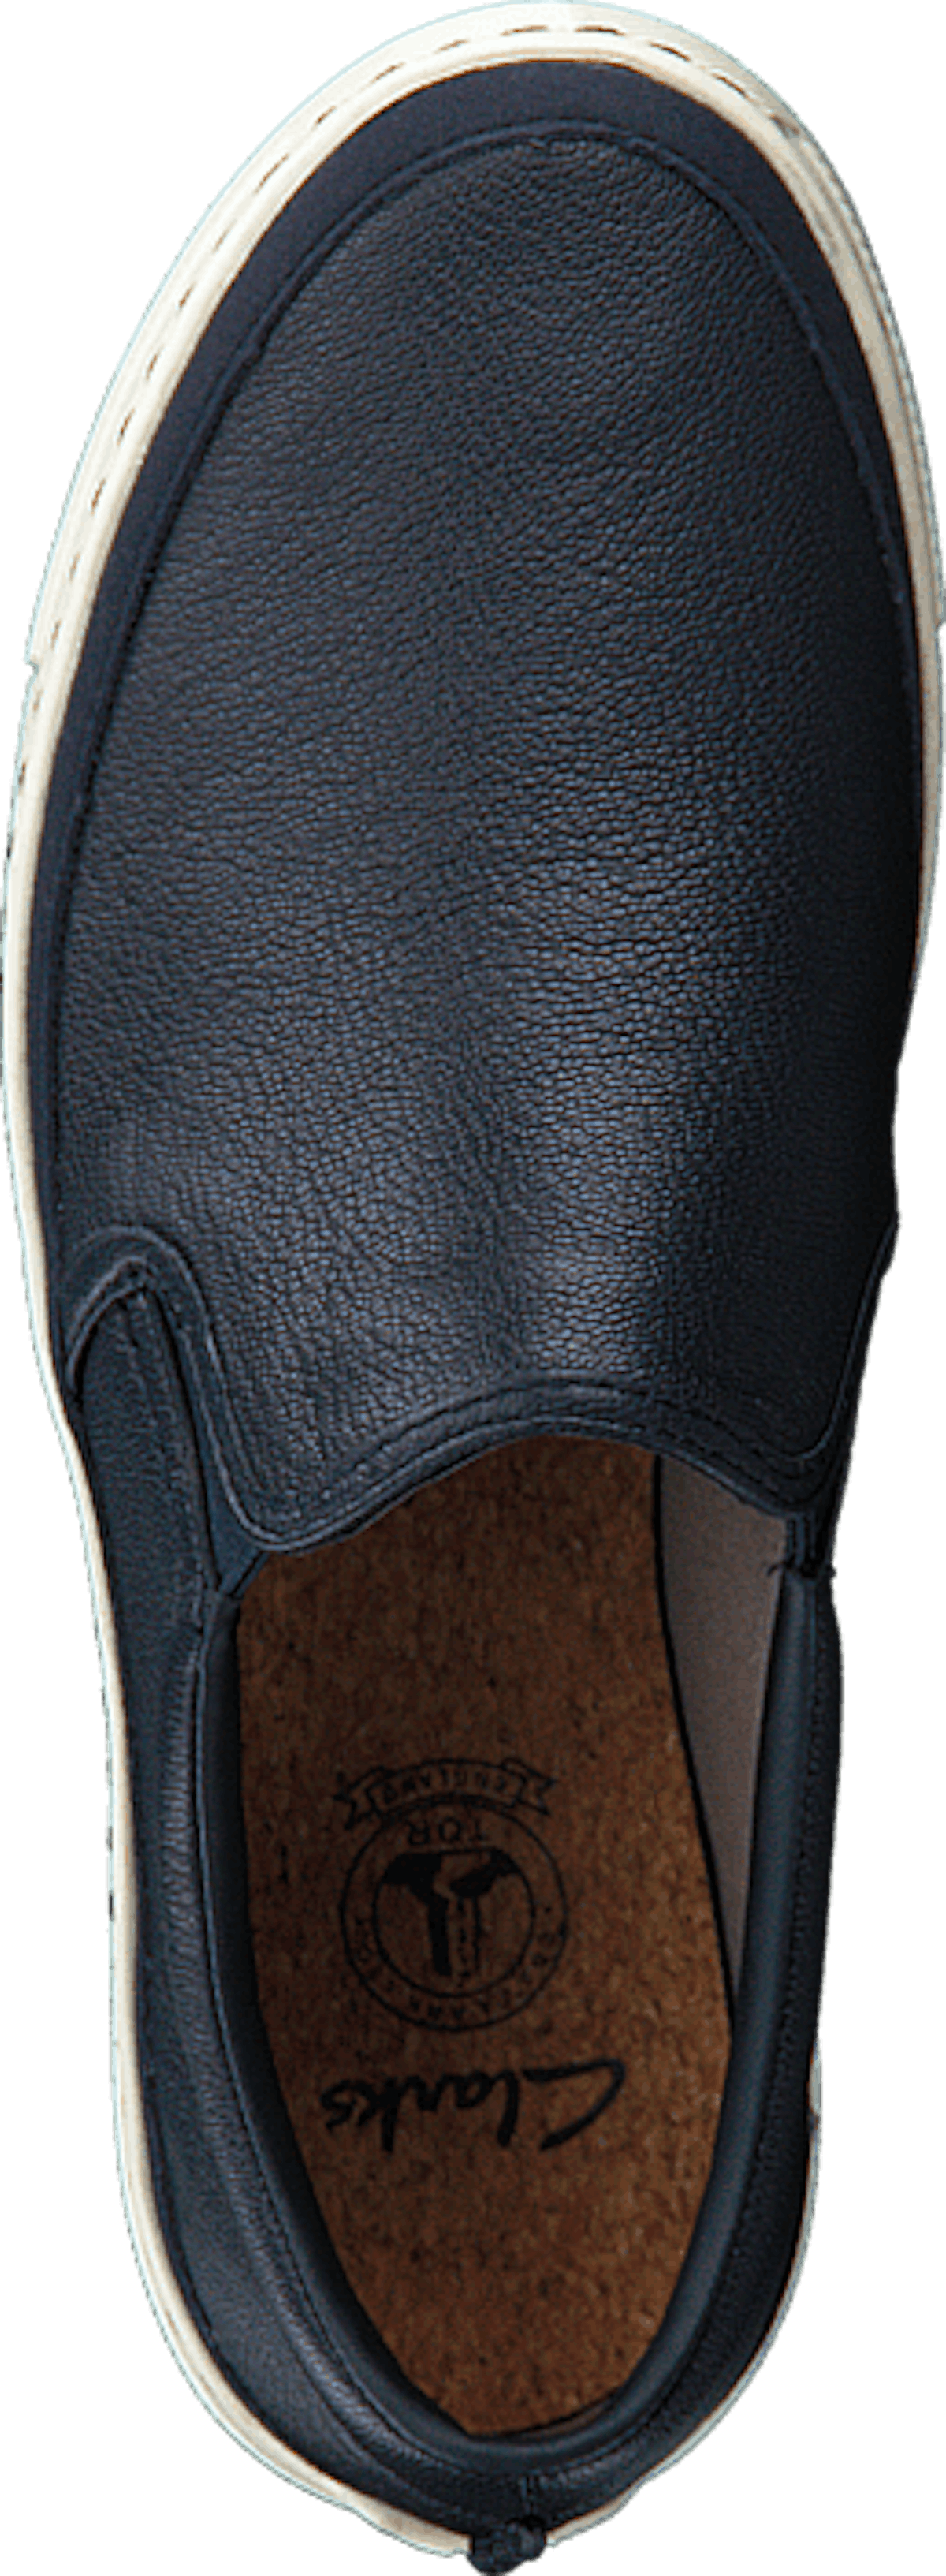 Ballof Step Navy Leather